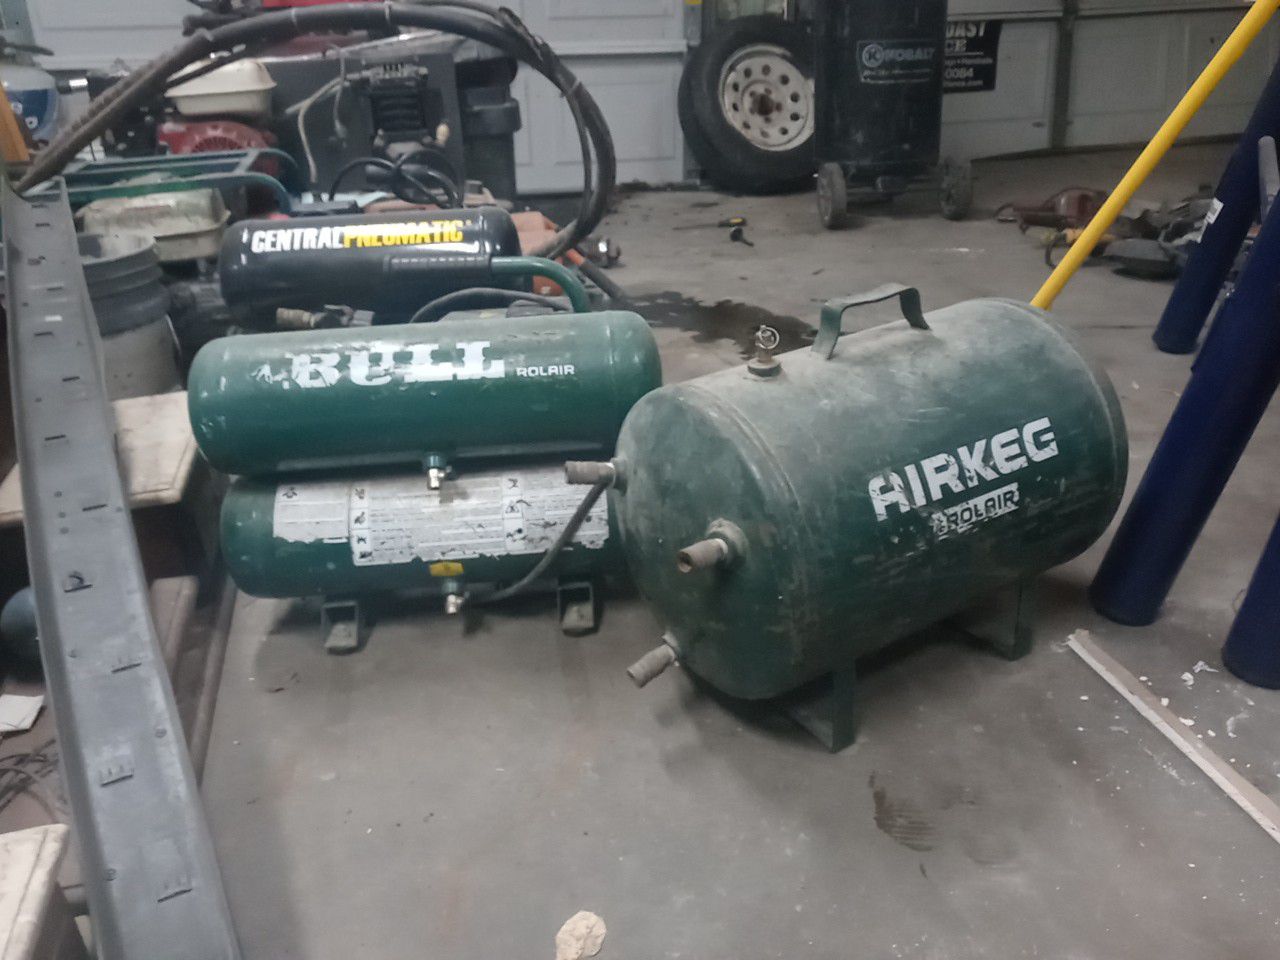 Bull rolair compressor and air keg